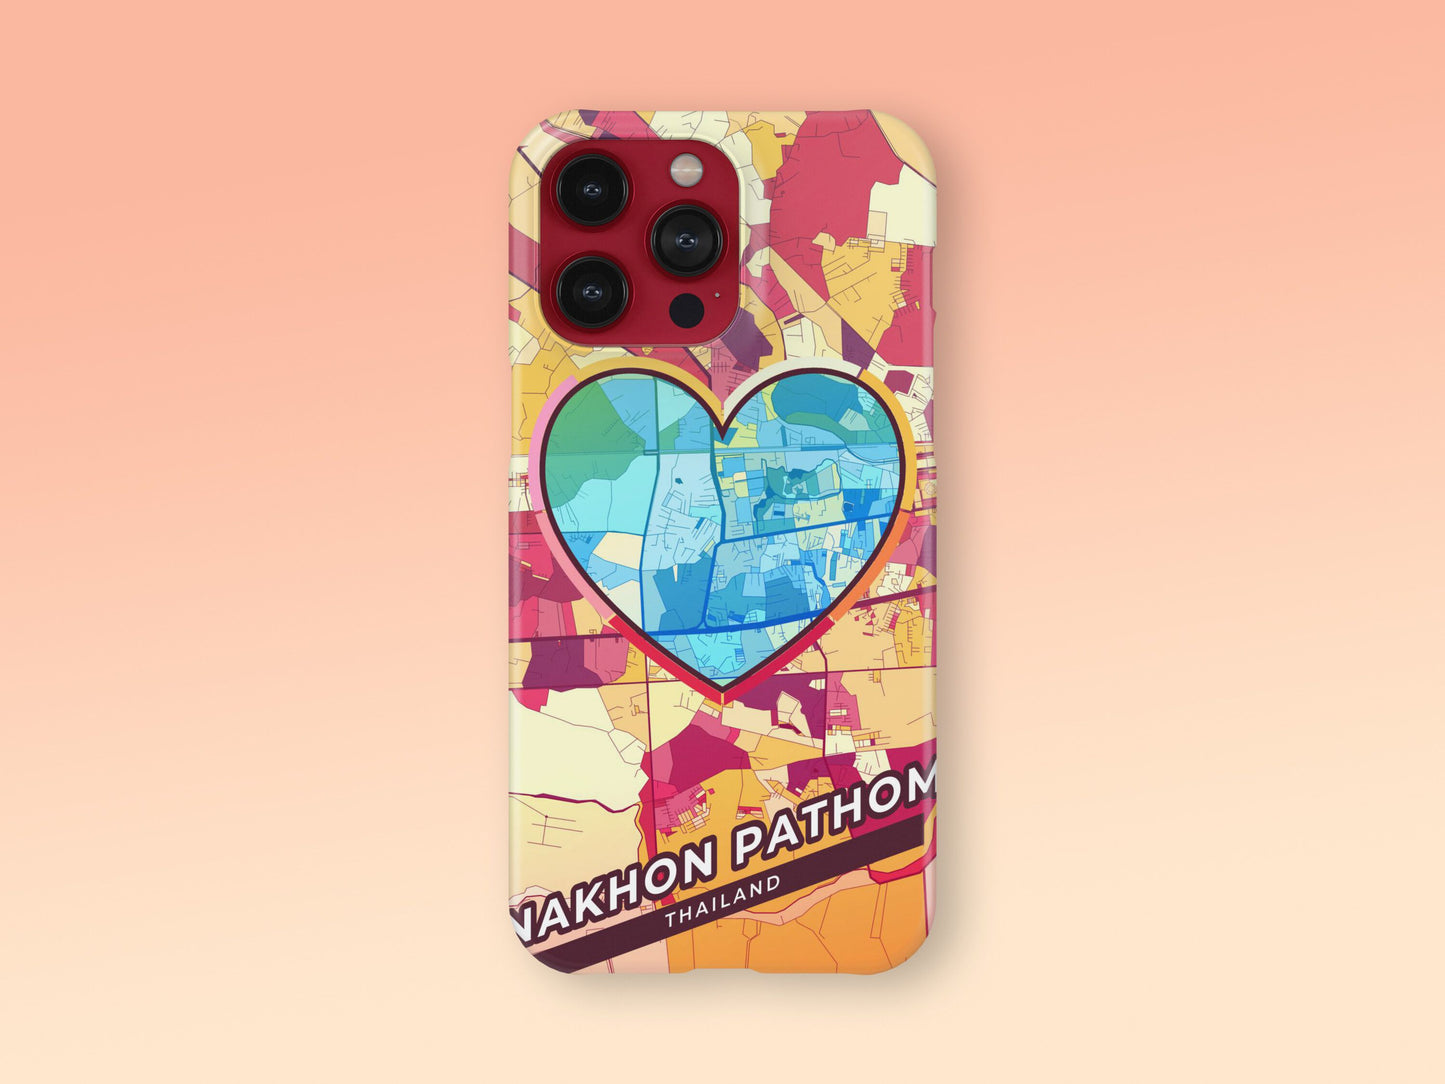 Nakhon Pathom Thailand slim phone case with colorful icon 2